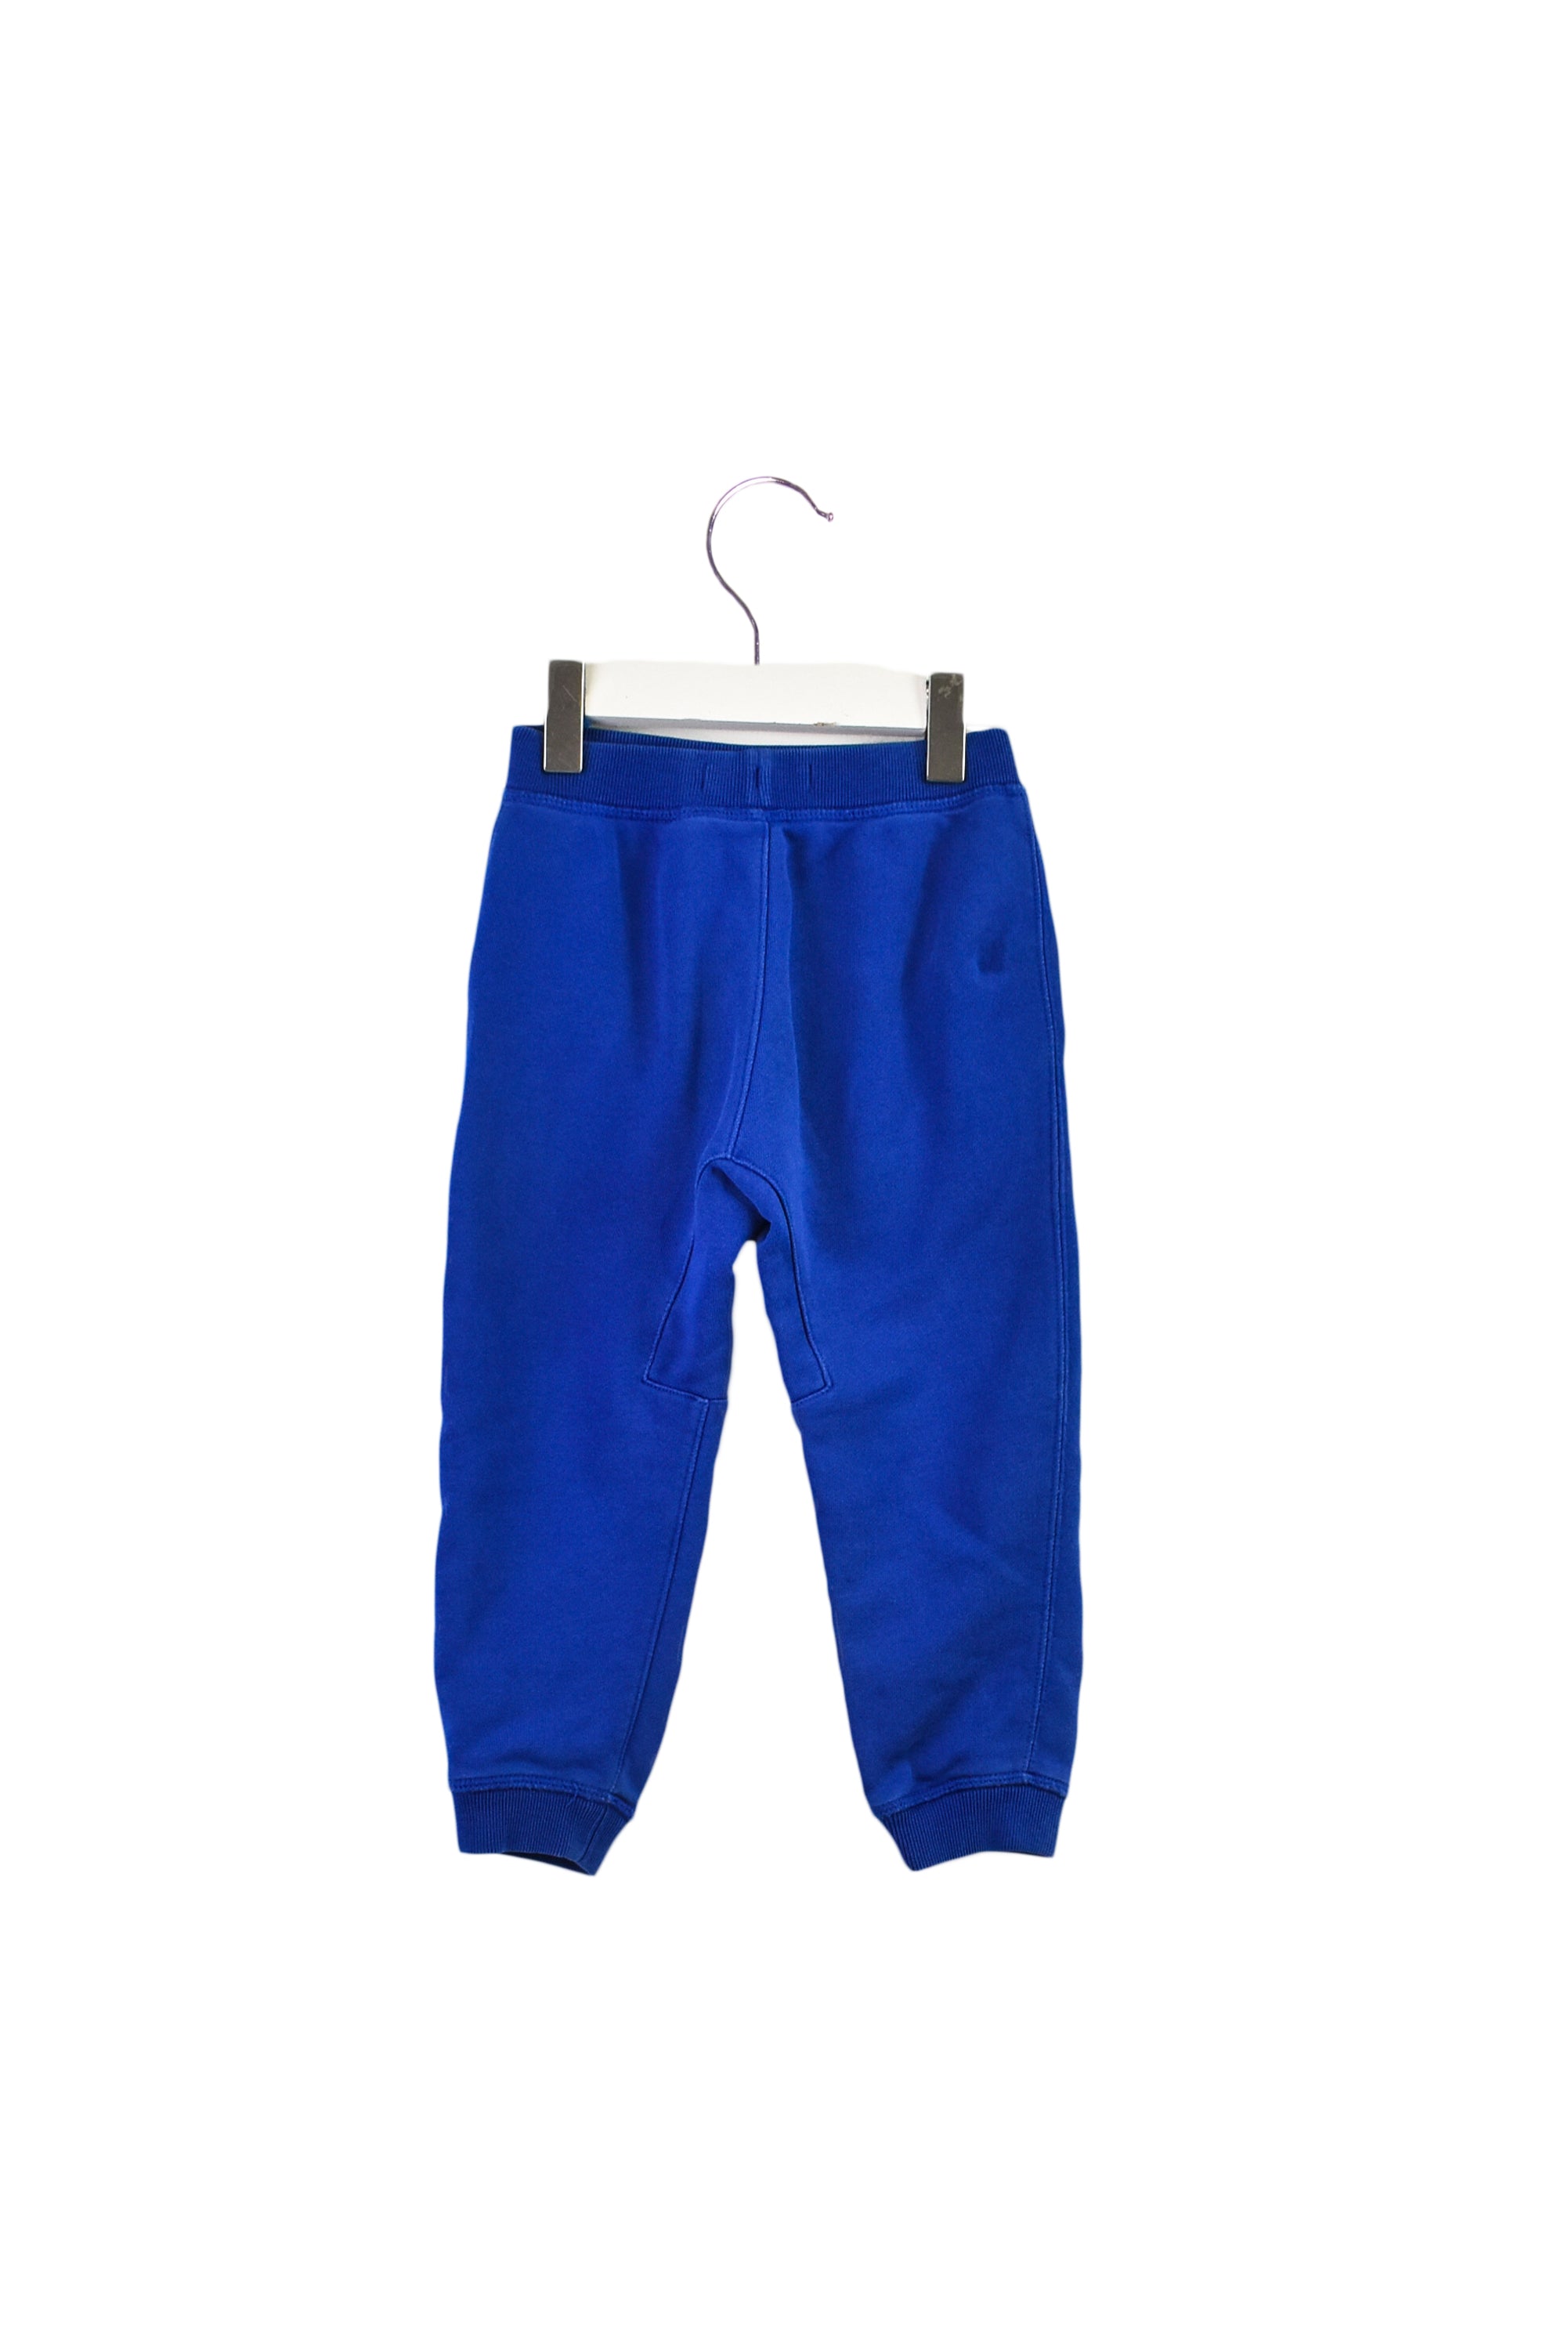 burberry pants kids blue